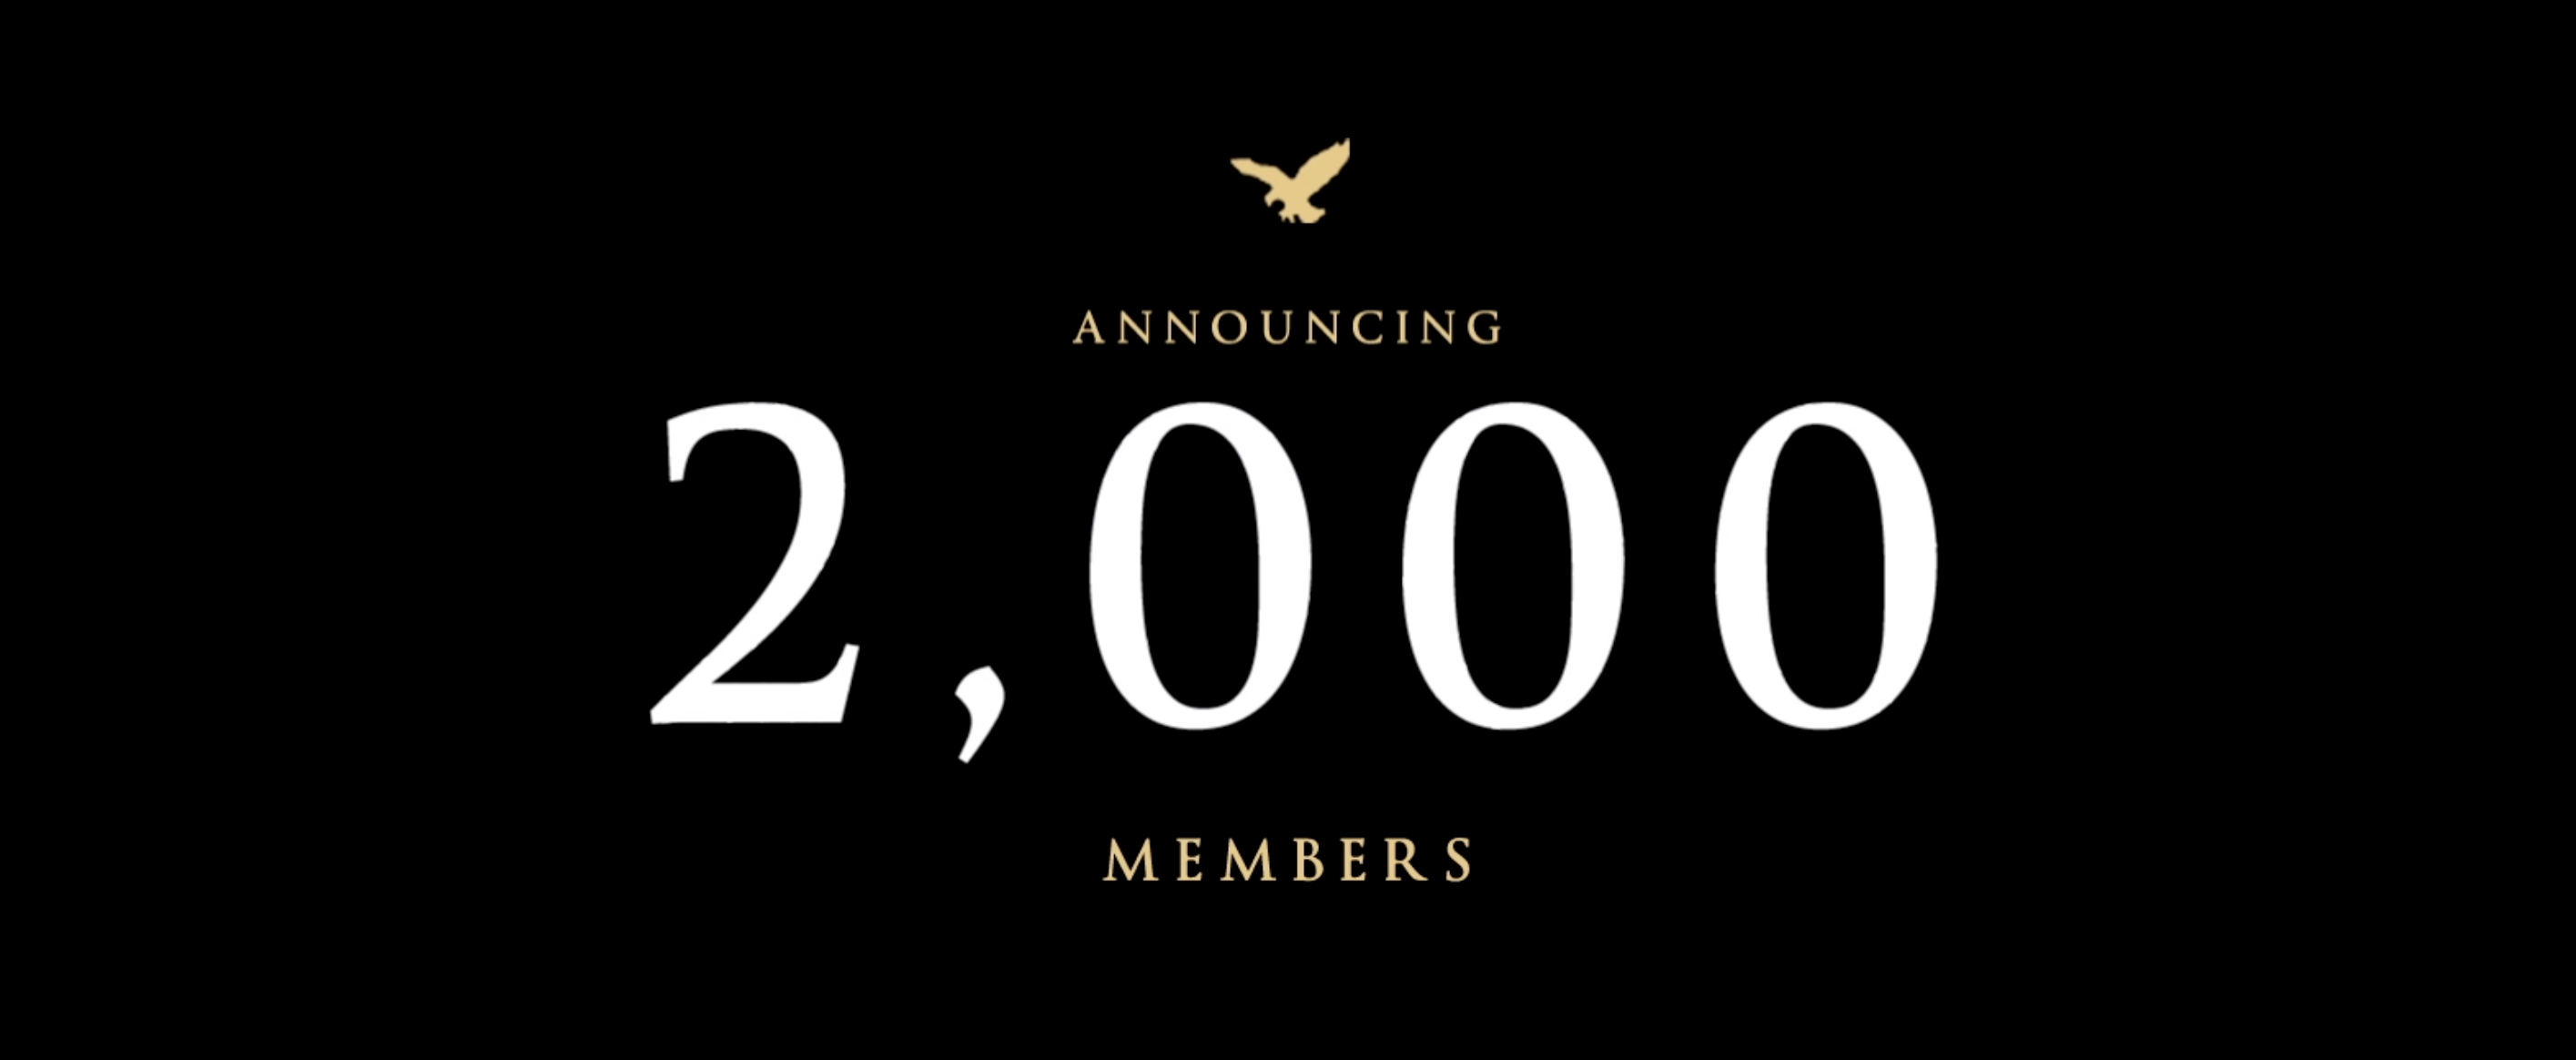 ONE ROQ Announces 2,00 Member Milestone Achievement